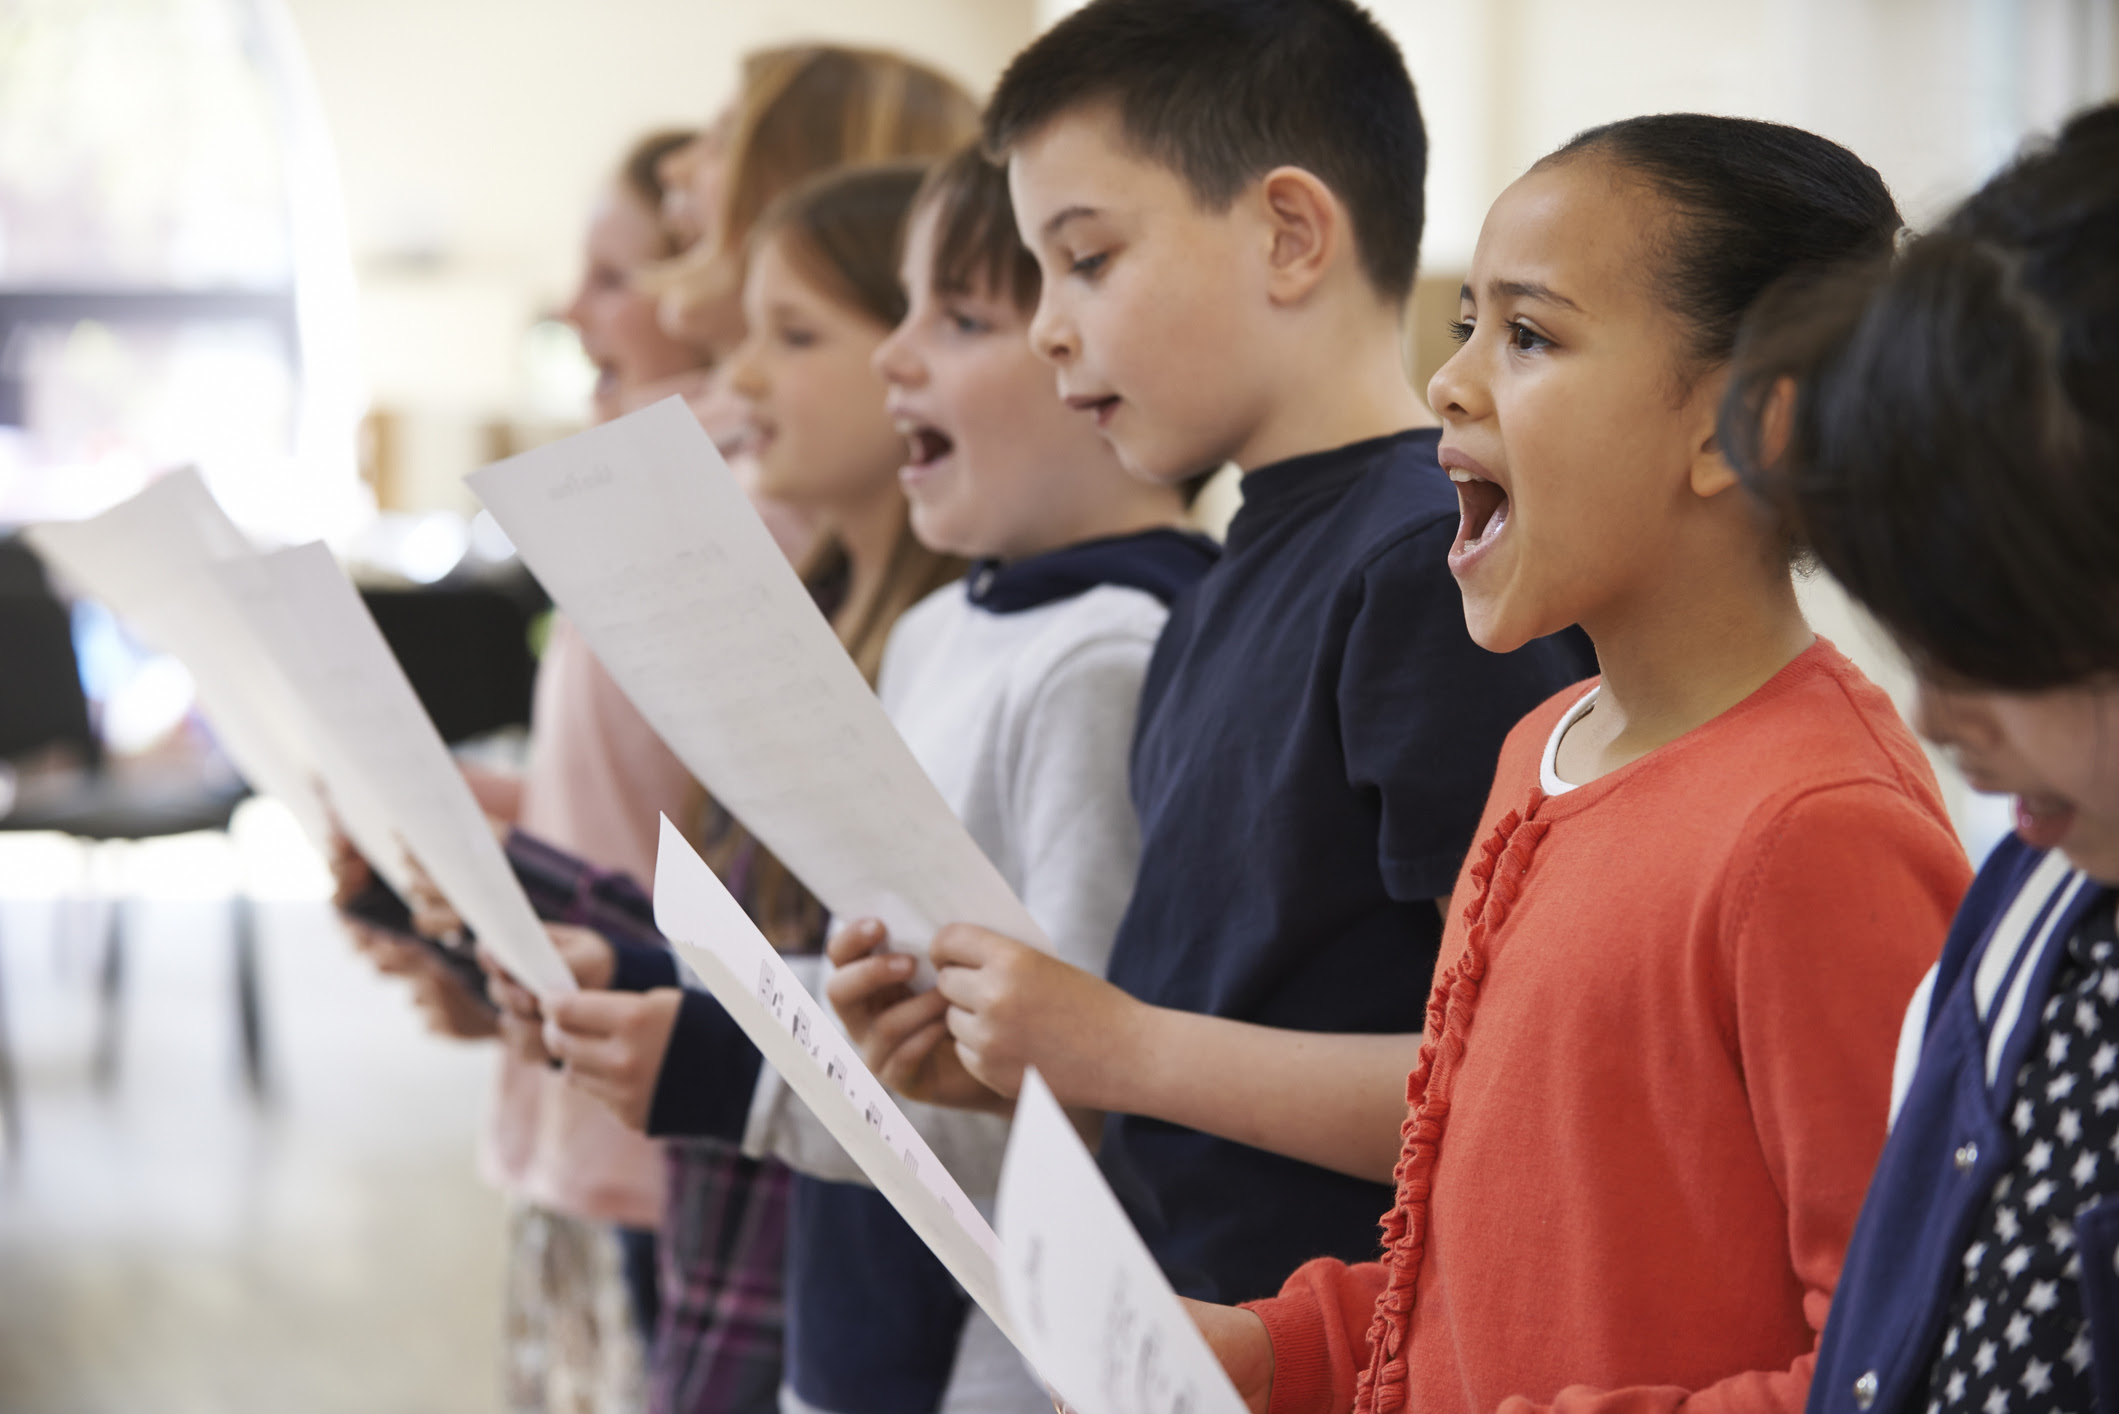 Childrens choir singing